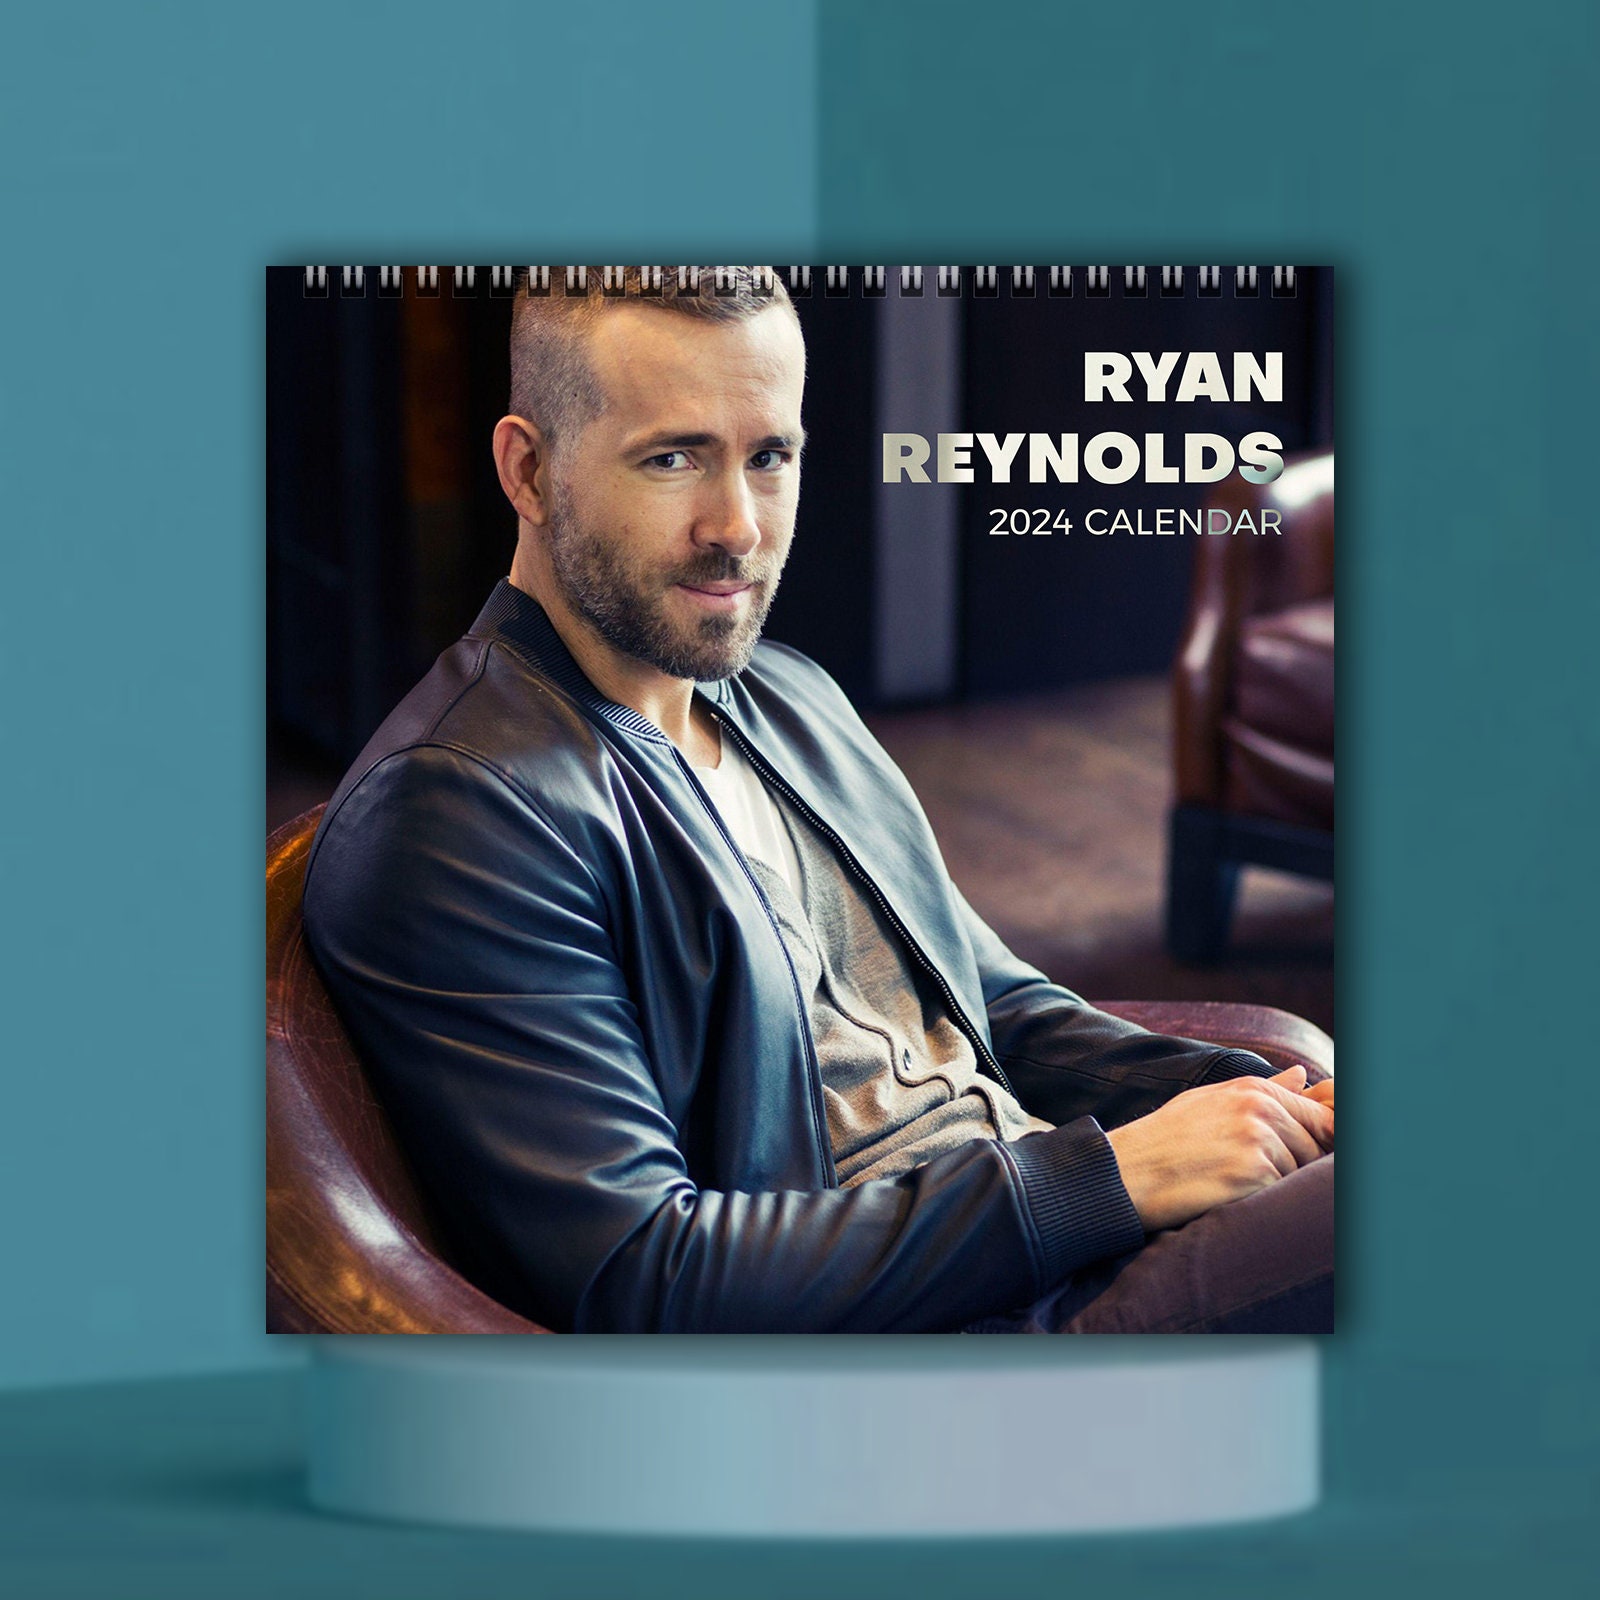 Ryan Reynolds Merchandise, Ryan Reynolds Blanket, Blanket for Her, Best  Friend Gift Idea, Ryan Reynolds Birthday, Birthday, Christmas Gift 